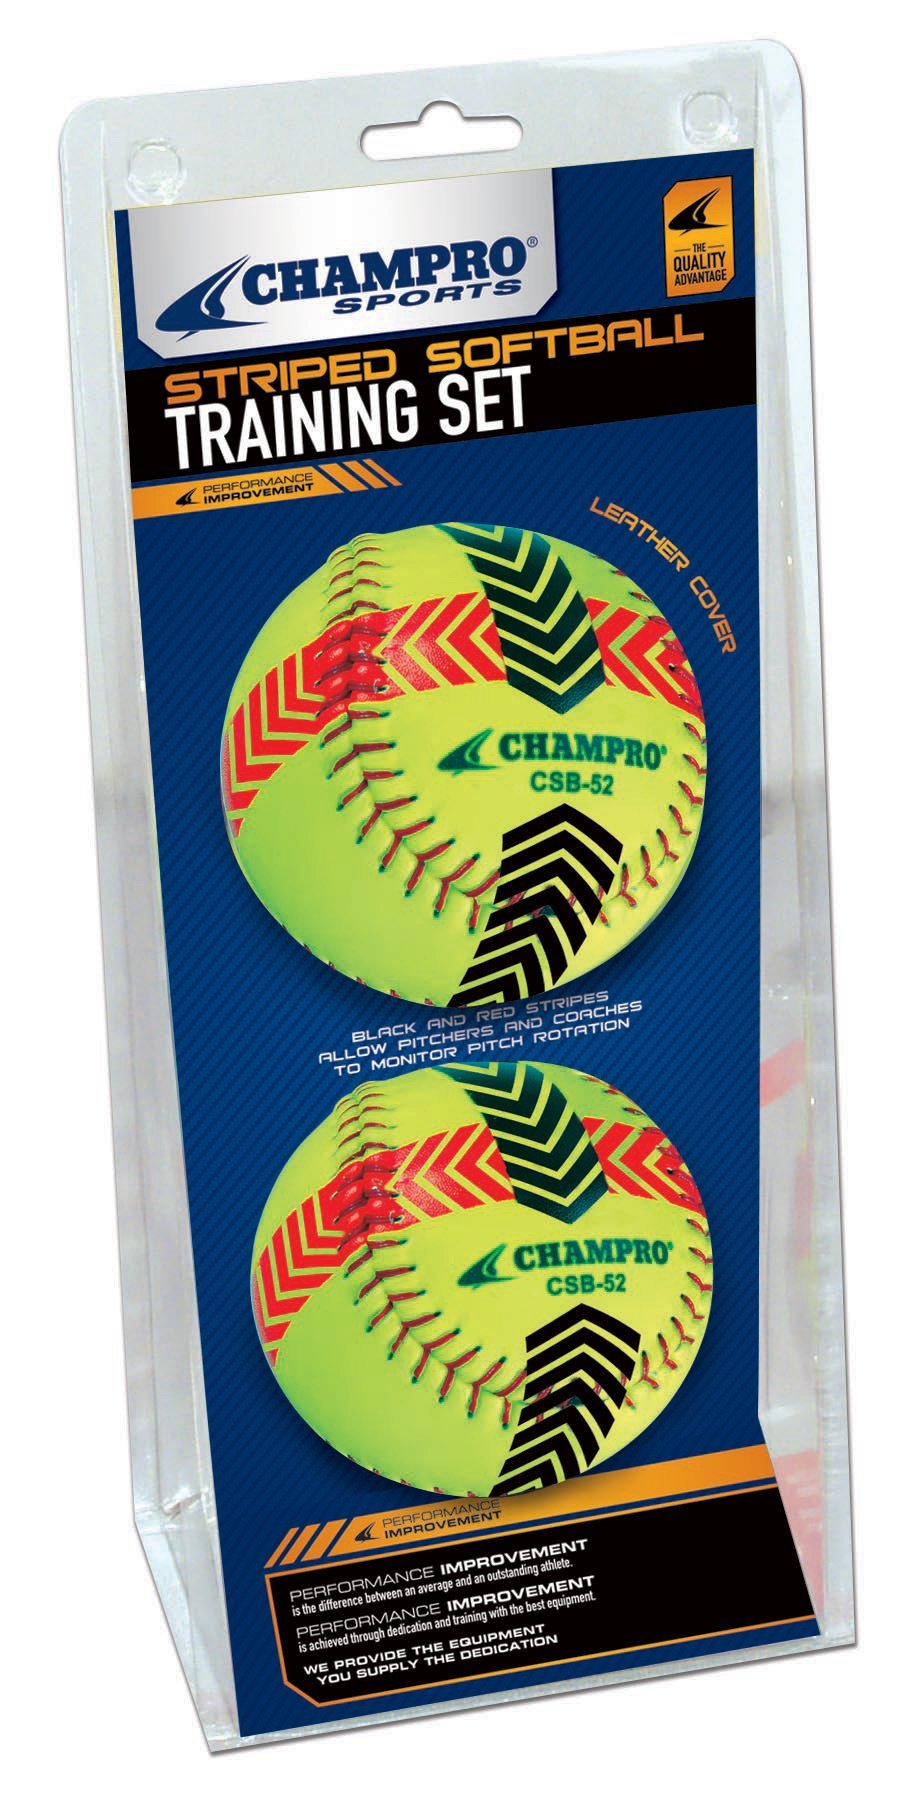 [AUSTRALIA] - Champro Striped Training Softball Set (Optic Yellow, 12-Inch) 